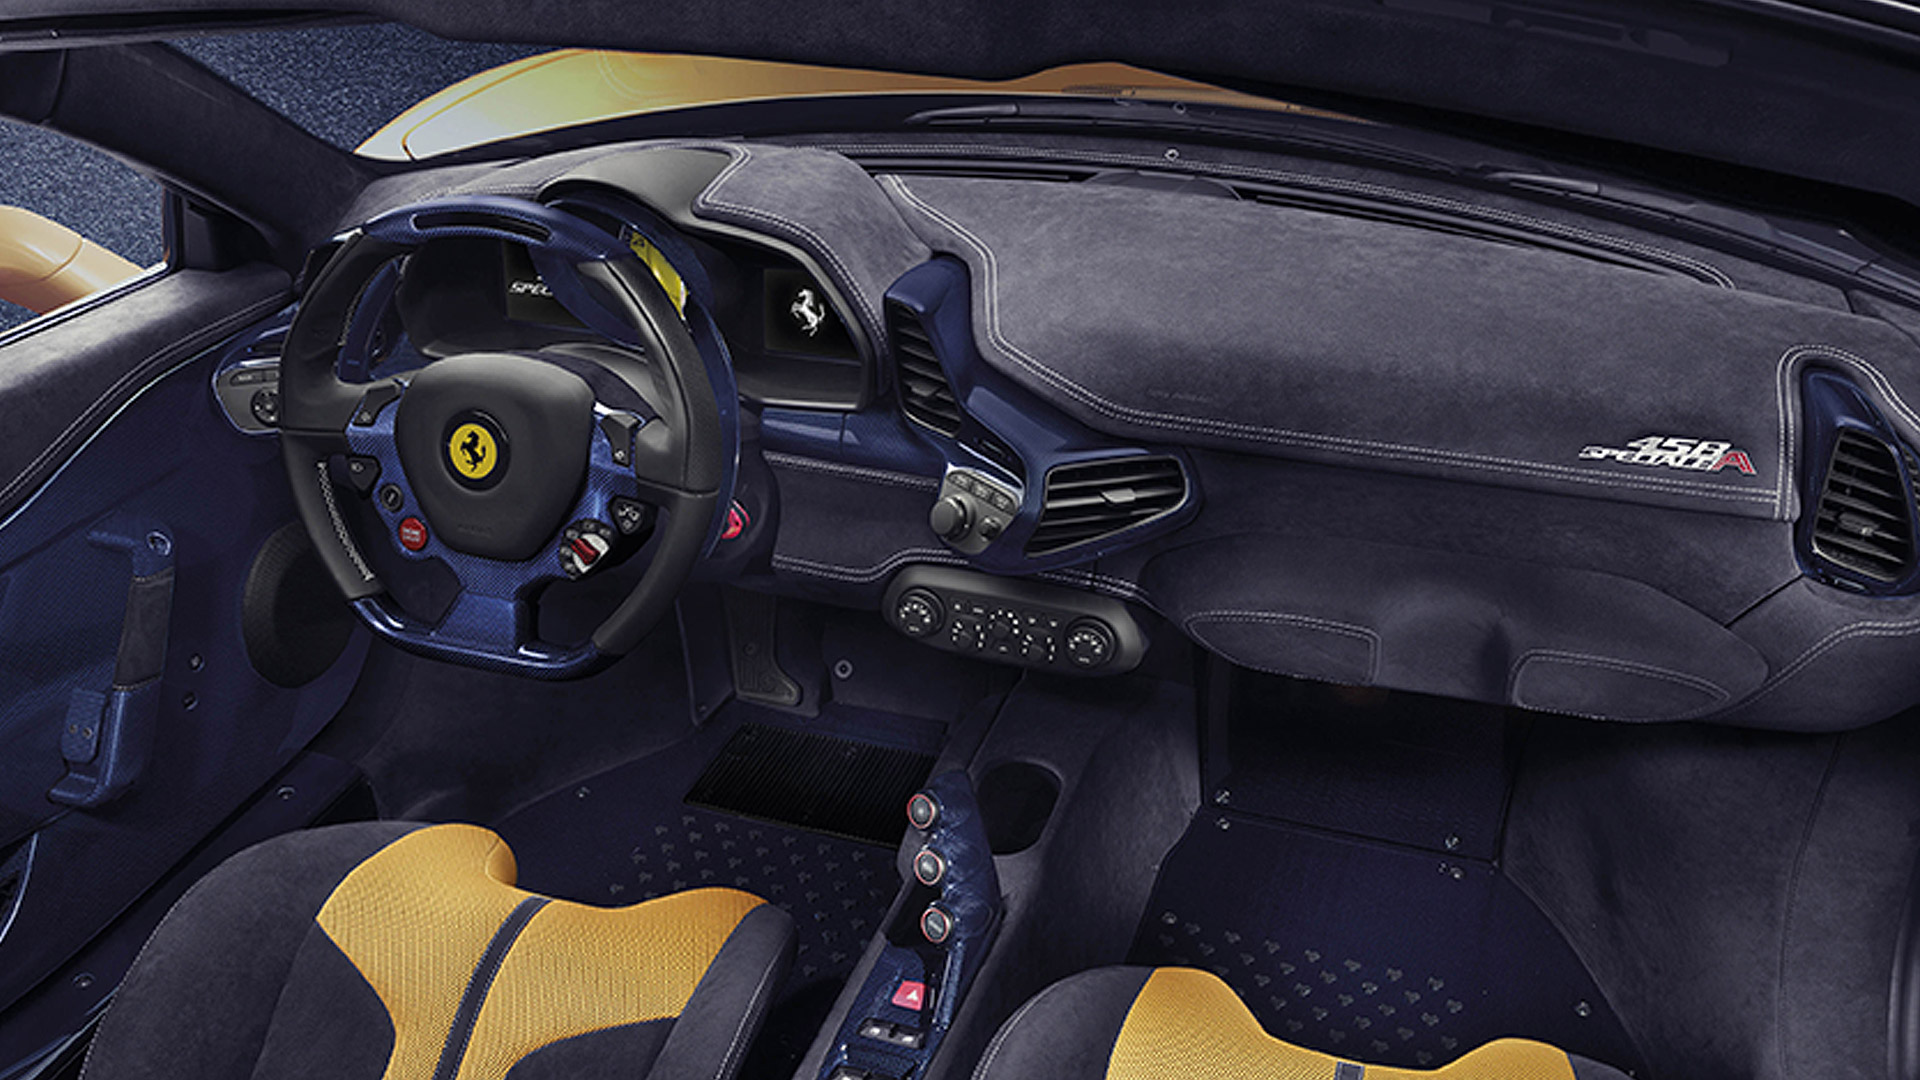 Ferrari 458 2015 Speciale A Interior Car Photos Overdrive